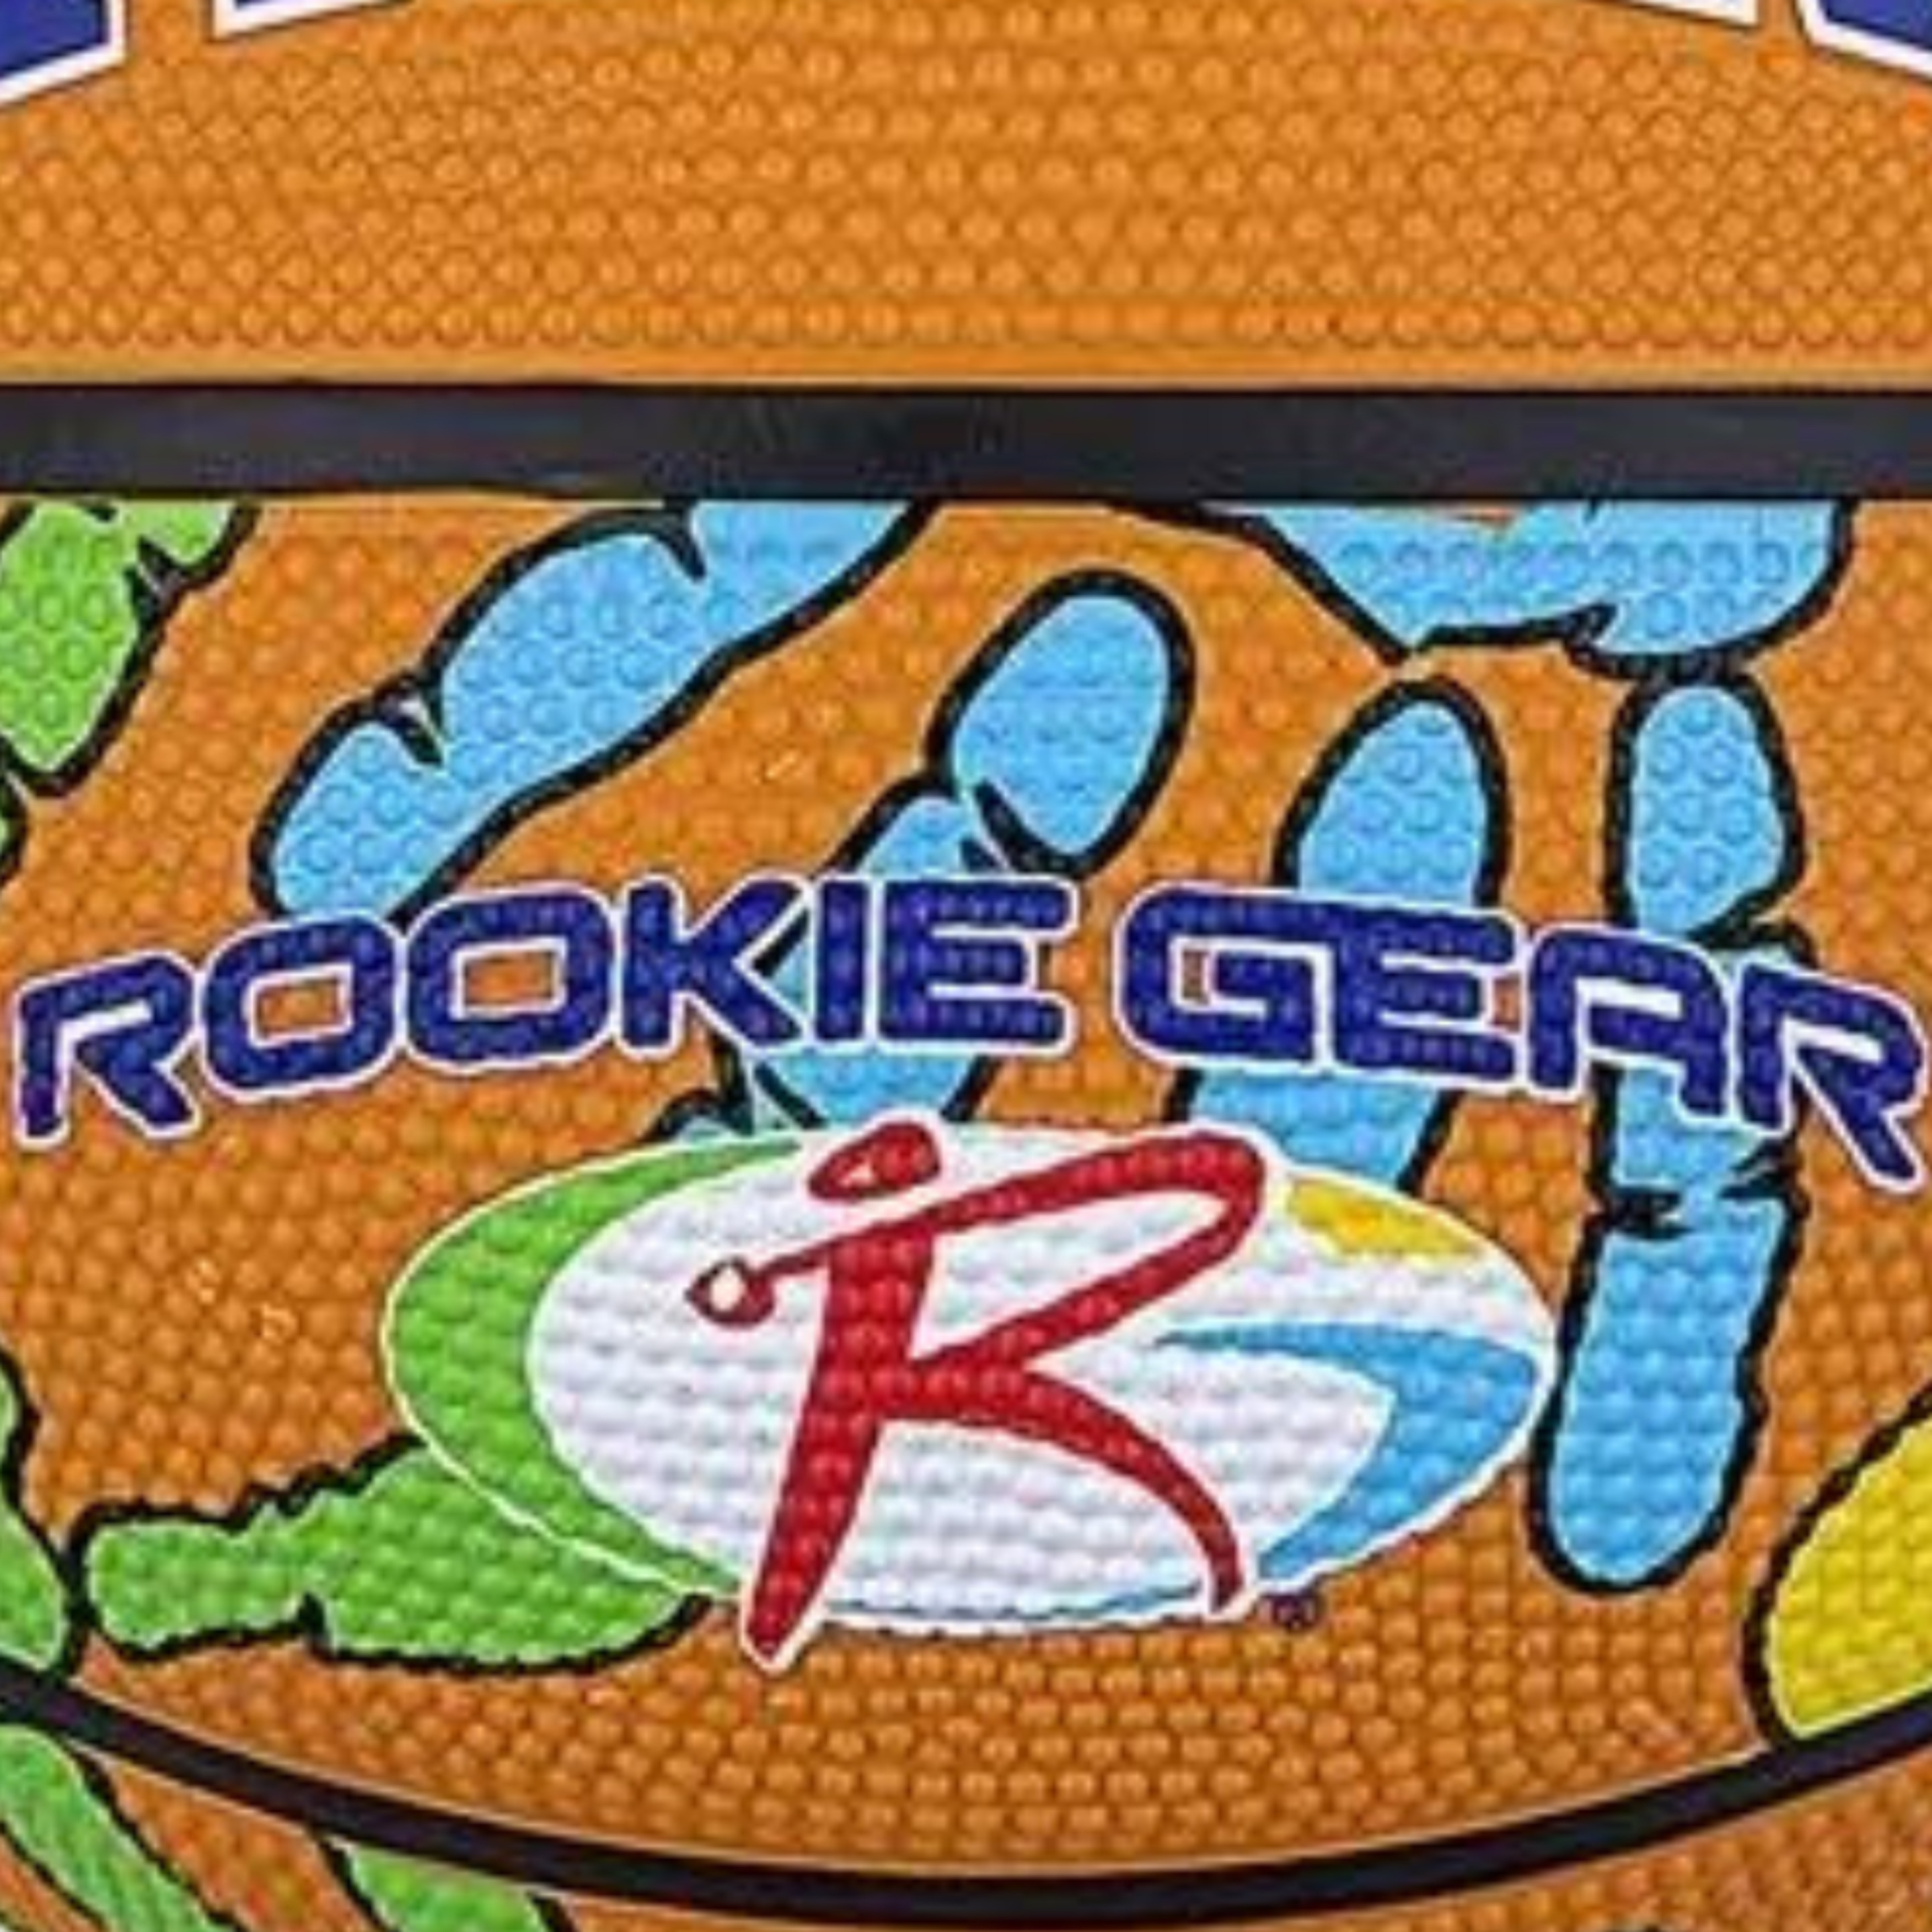 Balón De Baloncesto Spalding Rookie Gear Hands Sz4 Rubber